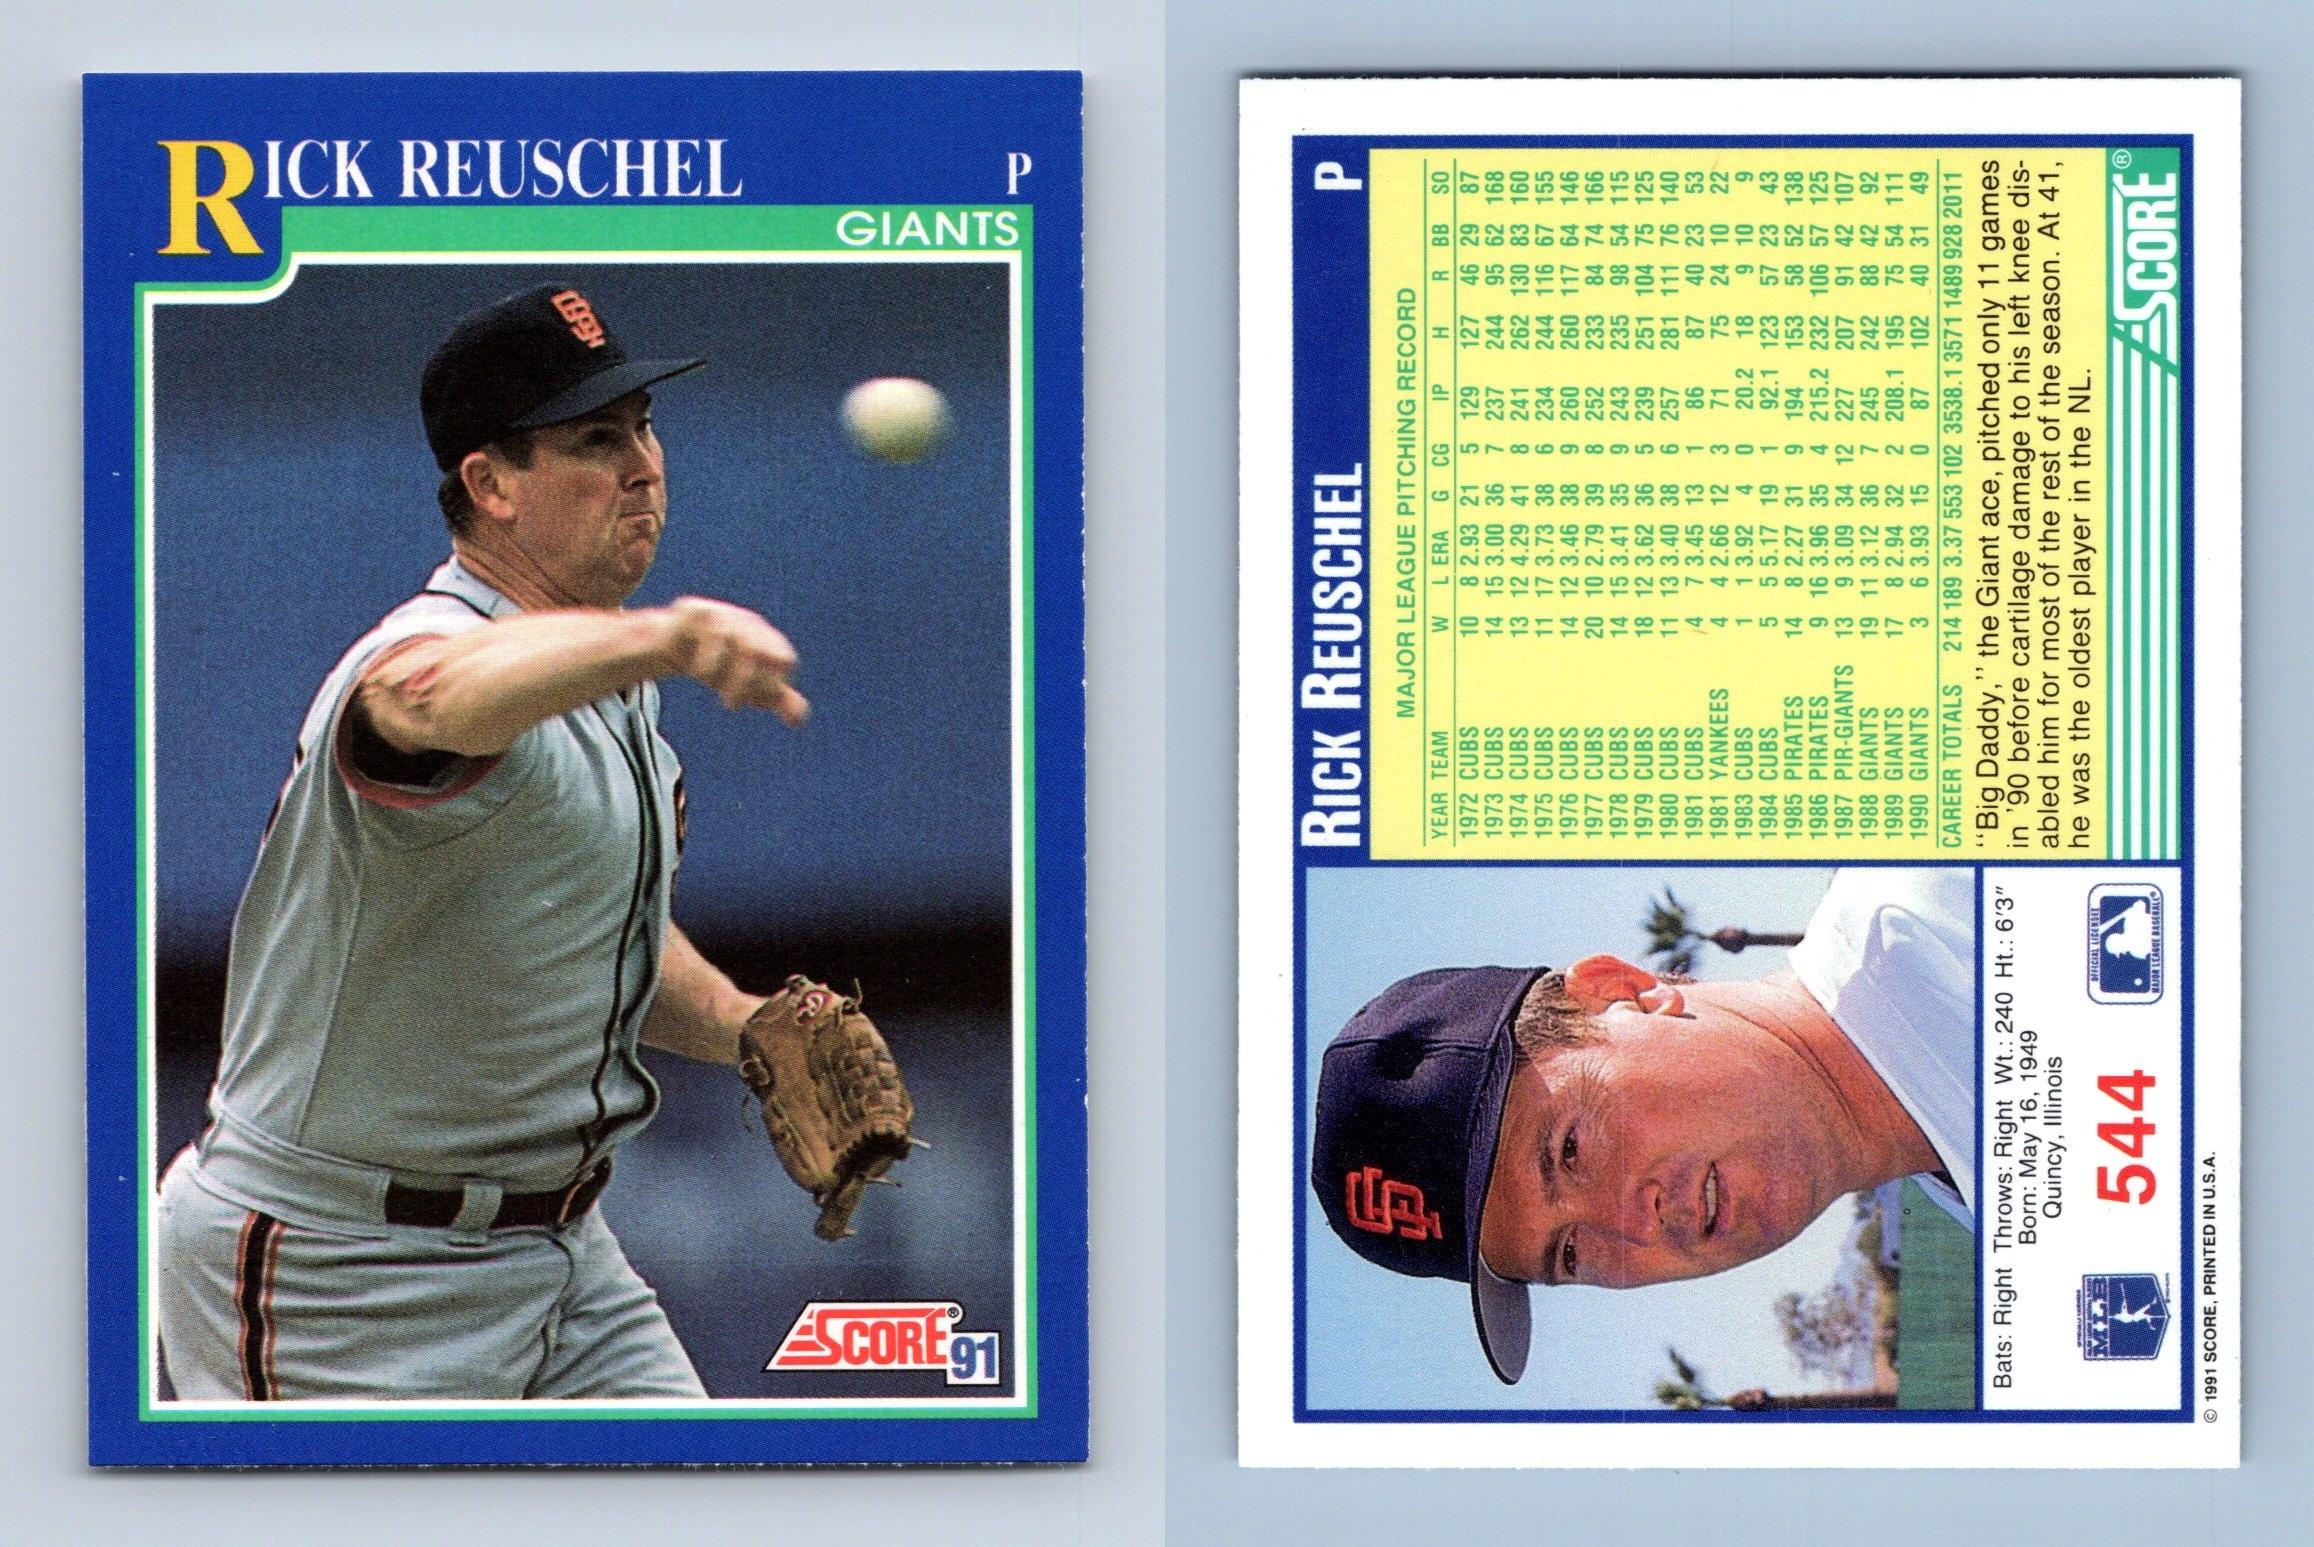 17 Rob Dibble - Cincinnati Reds - 1991 Score Baseball – Isolated Cards